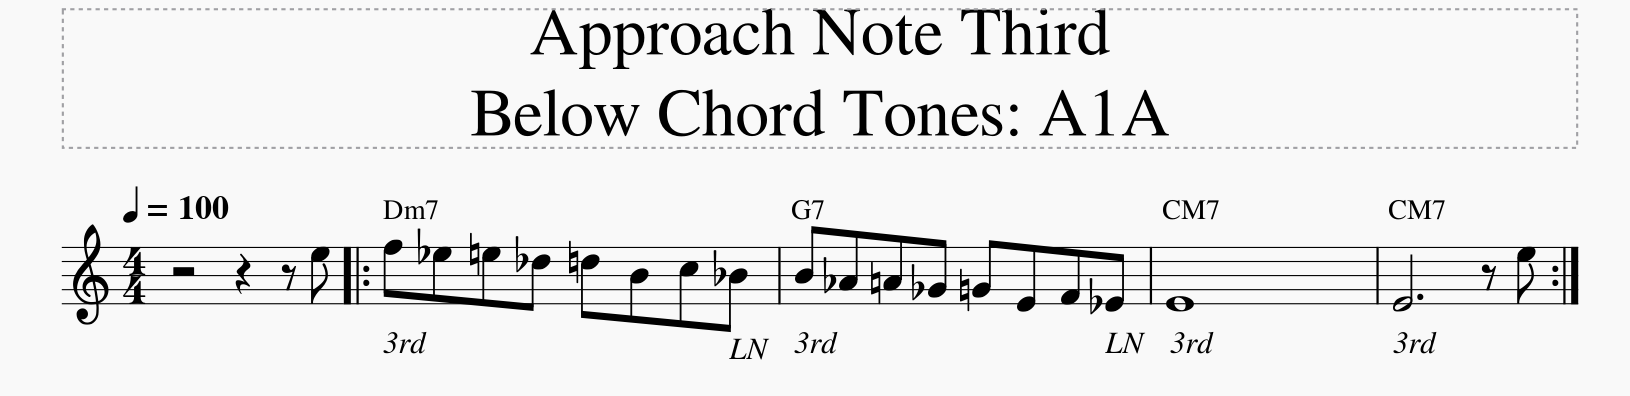 Chord Tones-approach-chord-tones-below-png